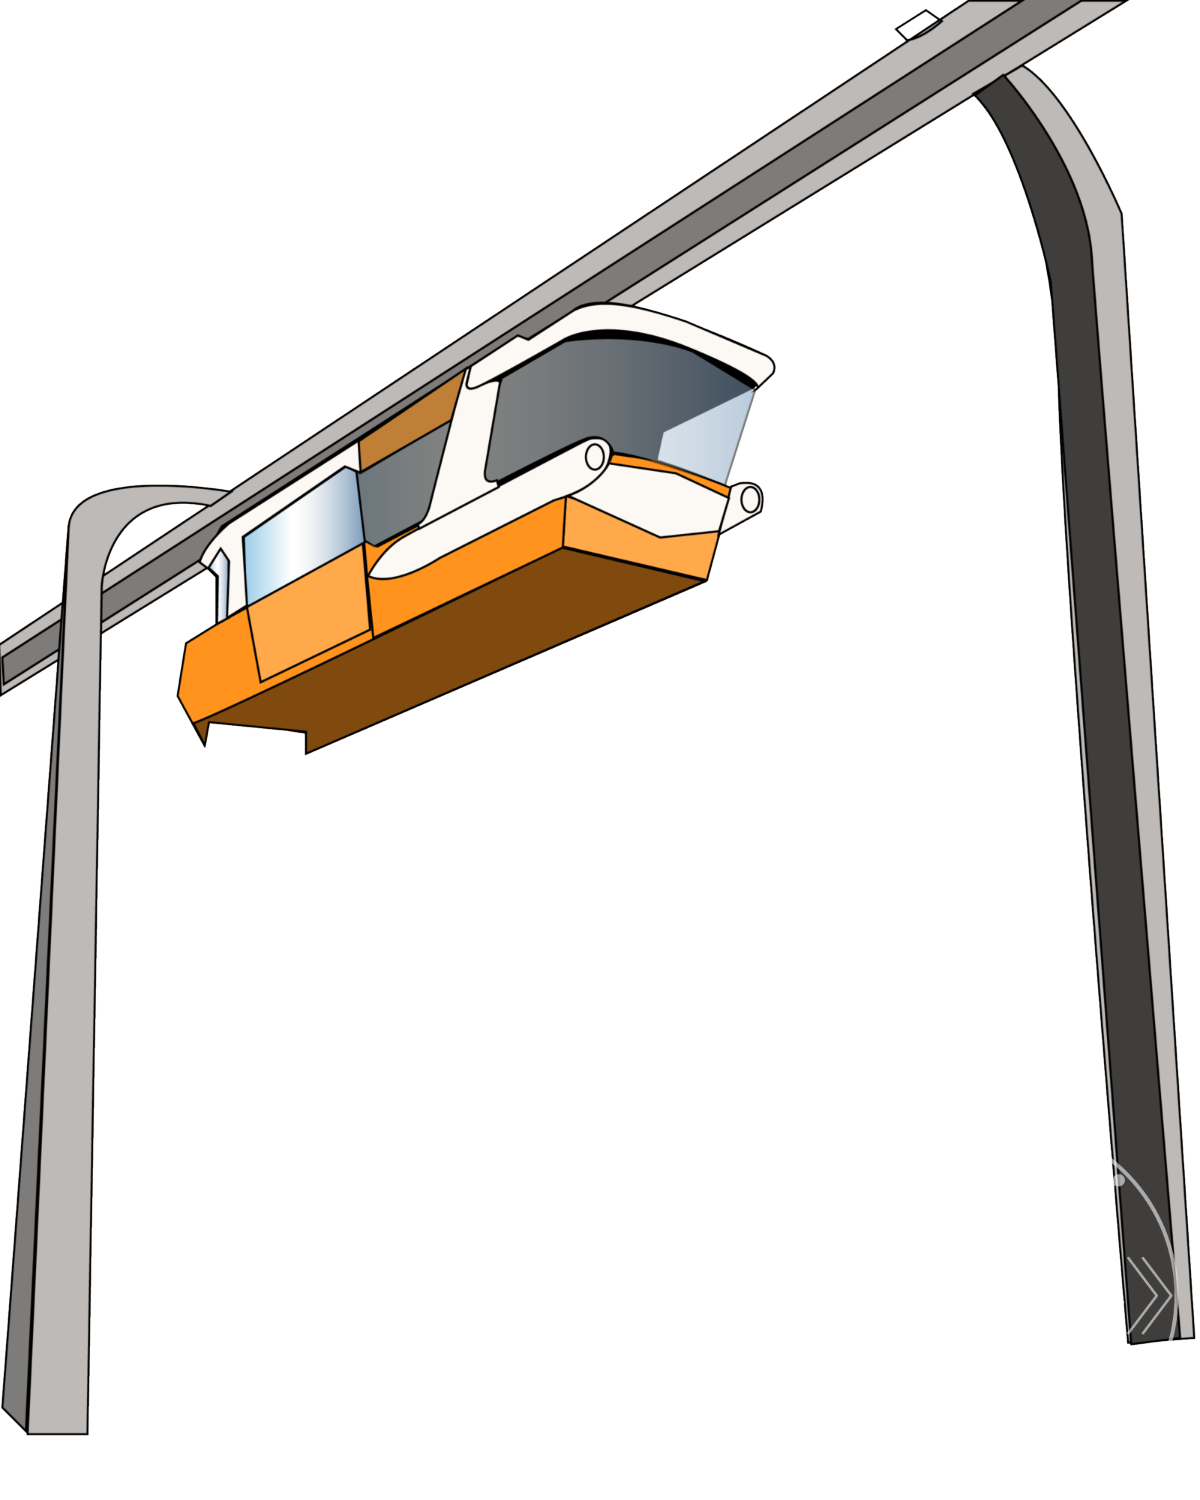 Los Angeles Monorail. 